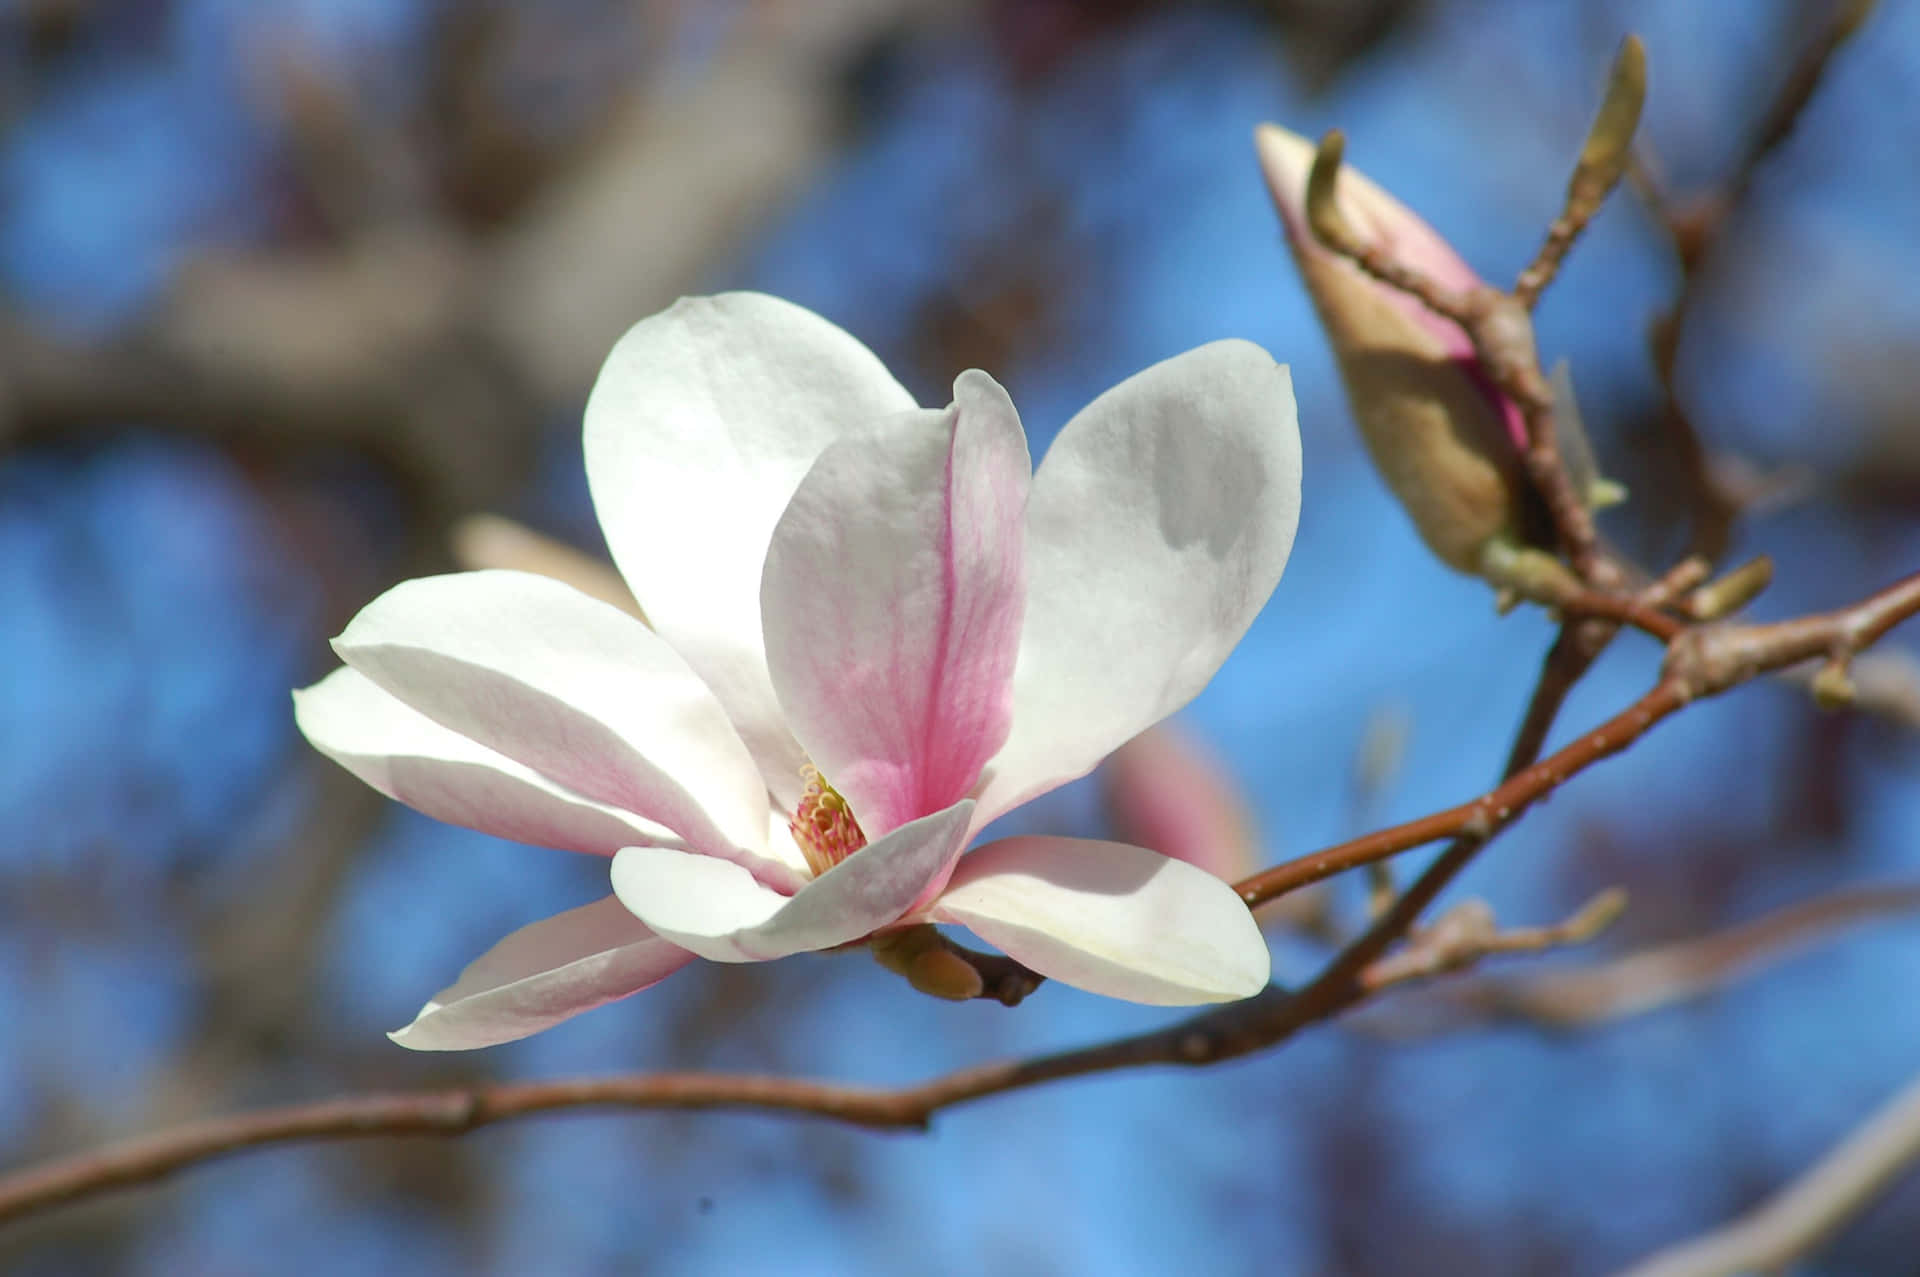 "The beauty of Magnolia's"